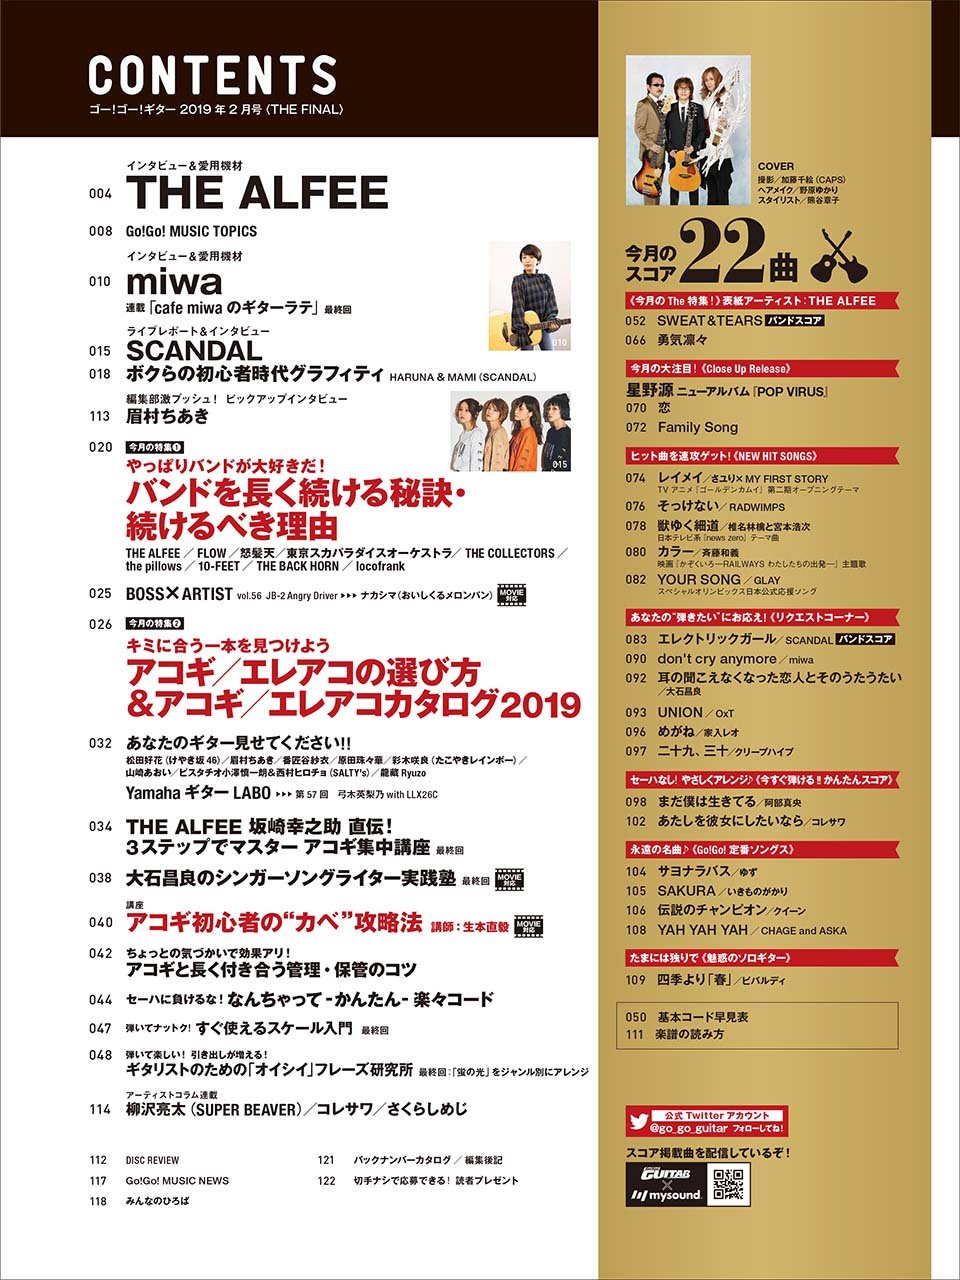 Matsuda Konoka In Go Go Guitar19 February Issue In Please Show Me Your Guitar Segment 松田好花 T Co Bfqqb2lyln T Co 34qjkjdipe